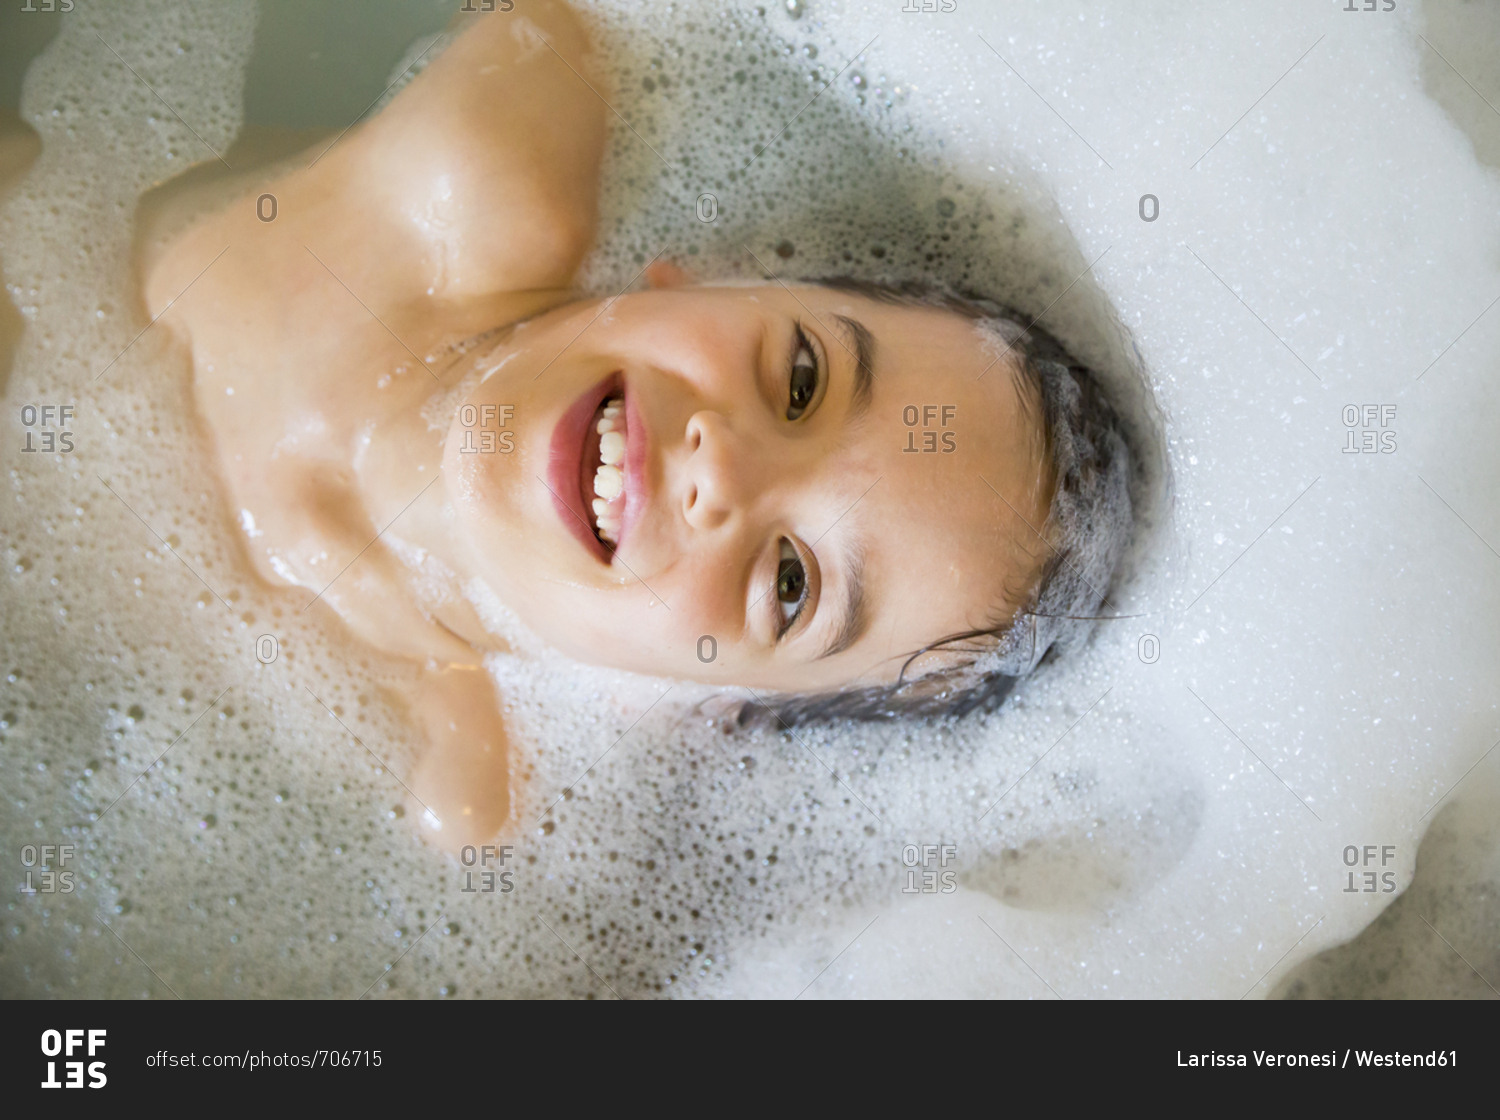 Girl Naked Bath